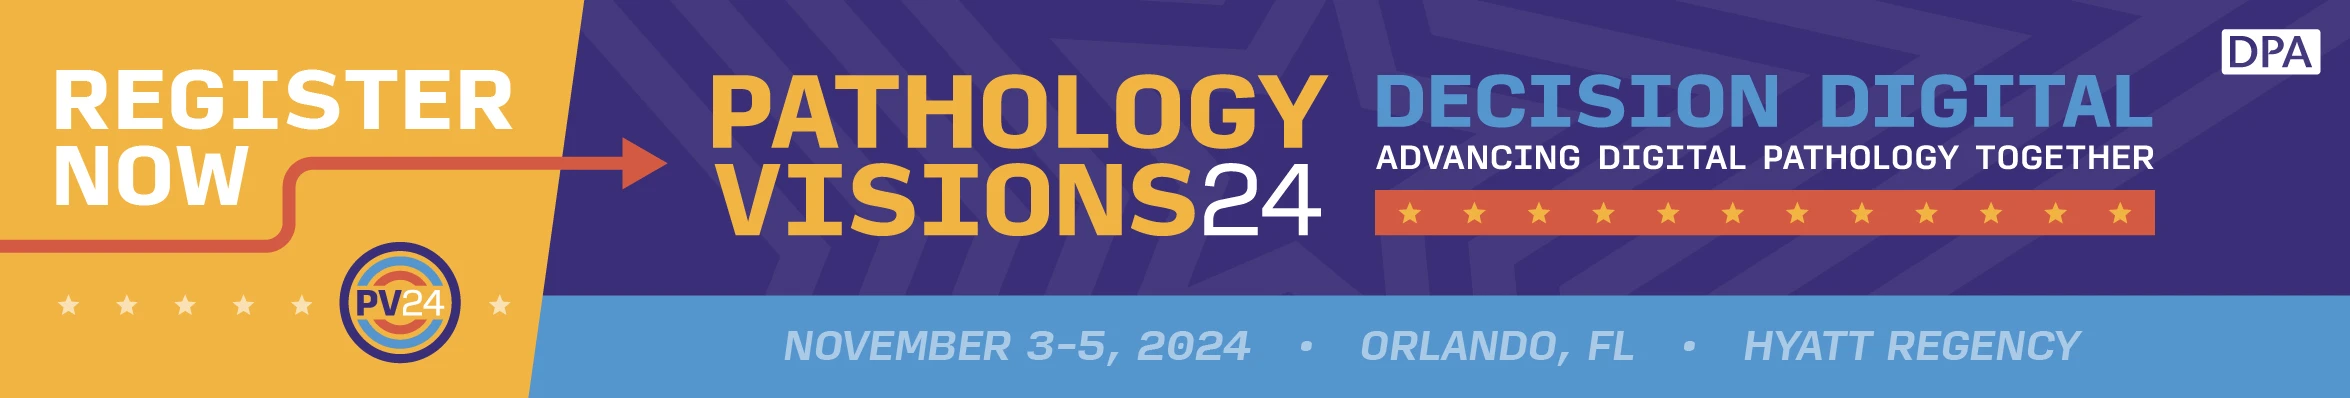 Pathology Visions24 Decision Digital Advancing Digital Pathology Together